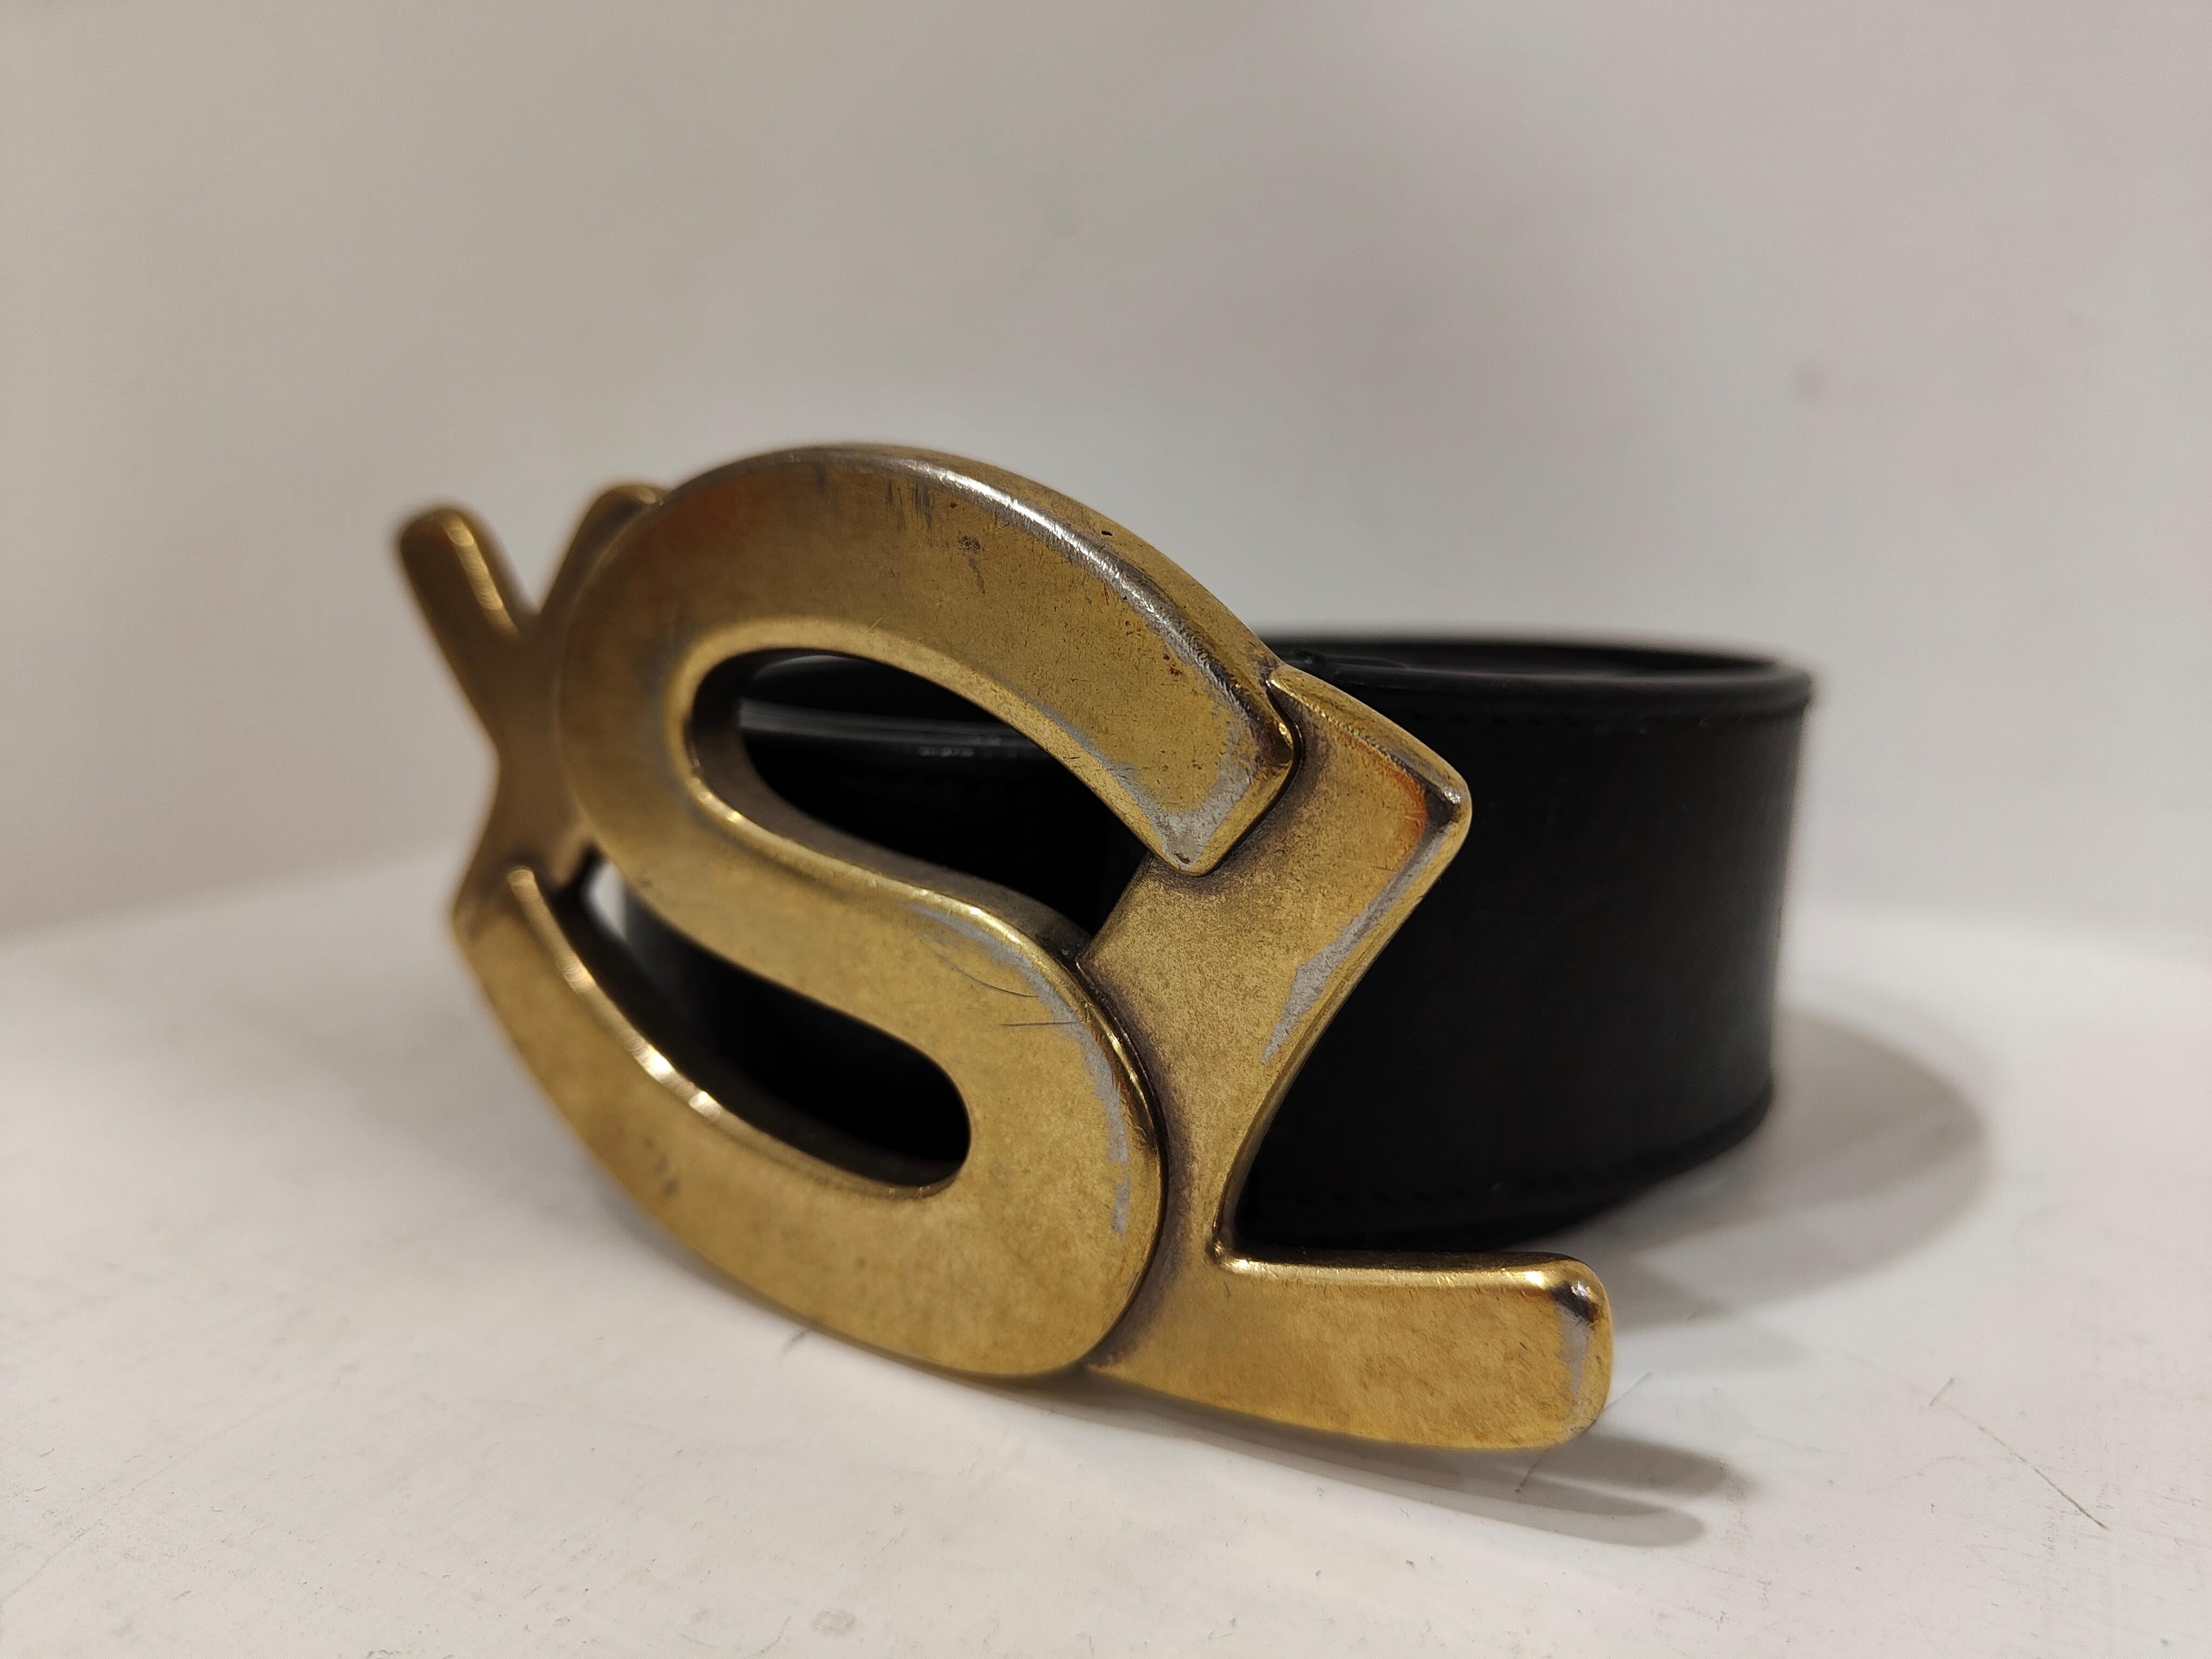 Yves Saint Laurent leather belt
gold tone hardware

total lenght 100 cm
h 4 cm